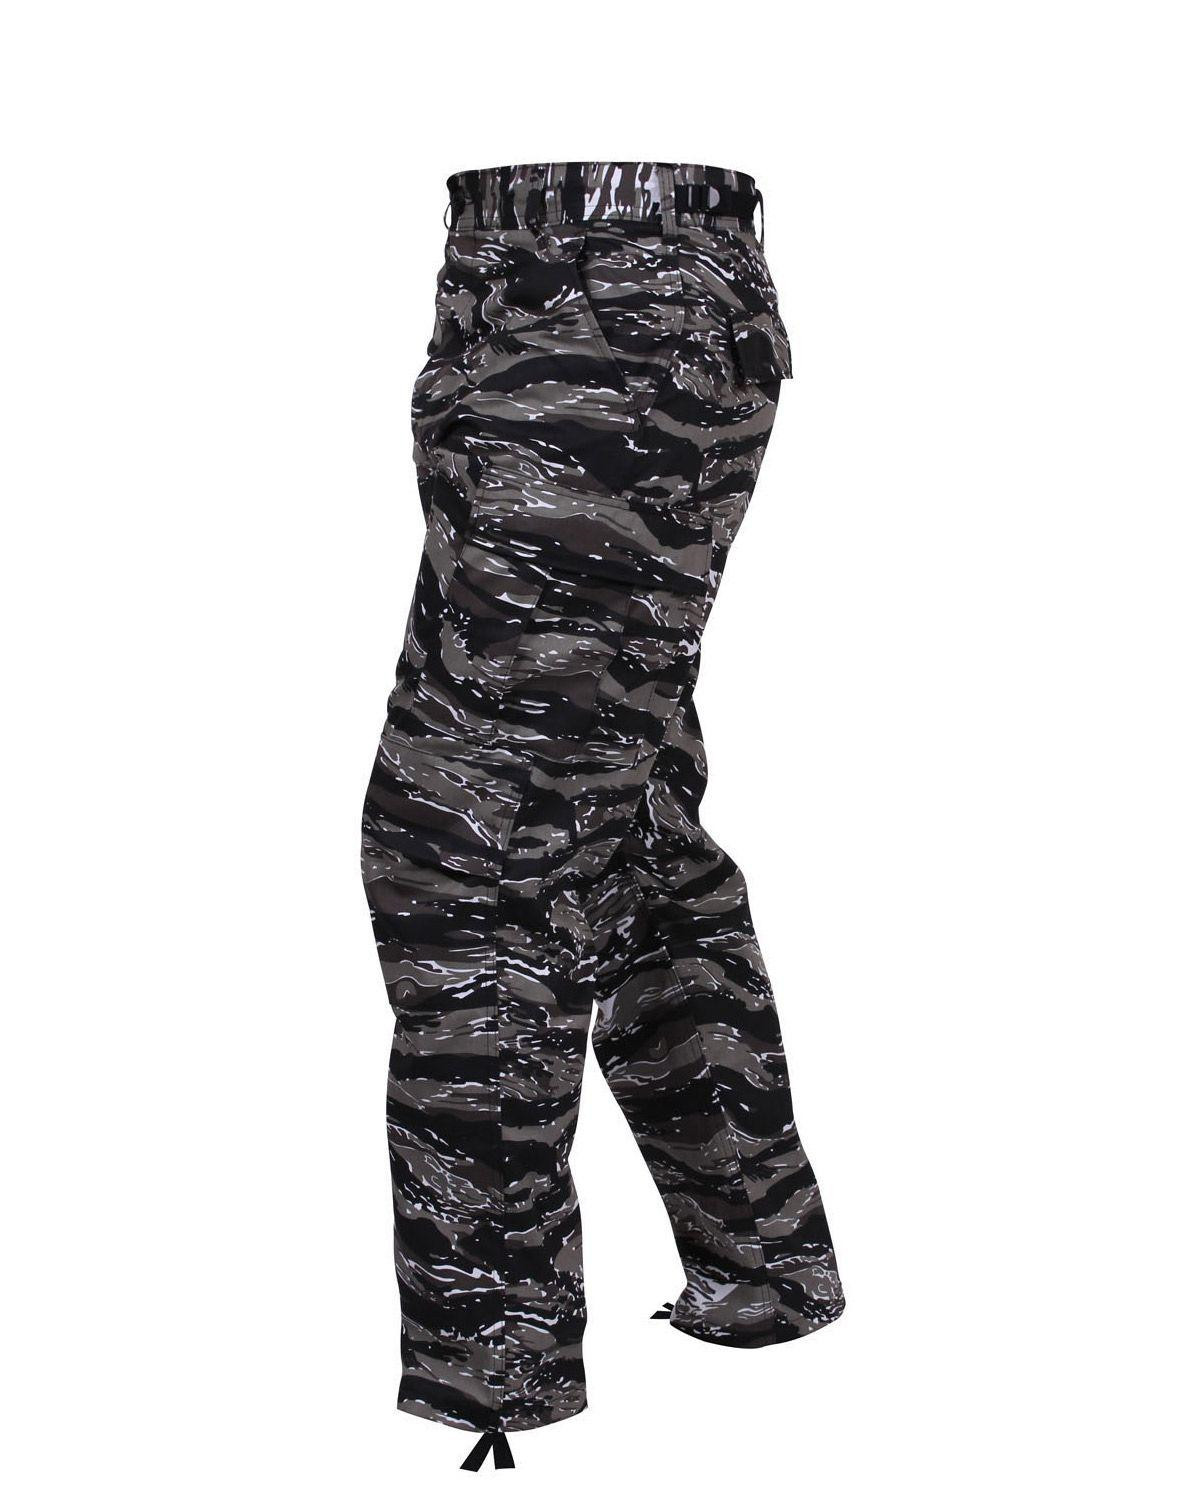 Rothco Subdued Urban Digital Shirt & Pants Set 